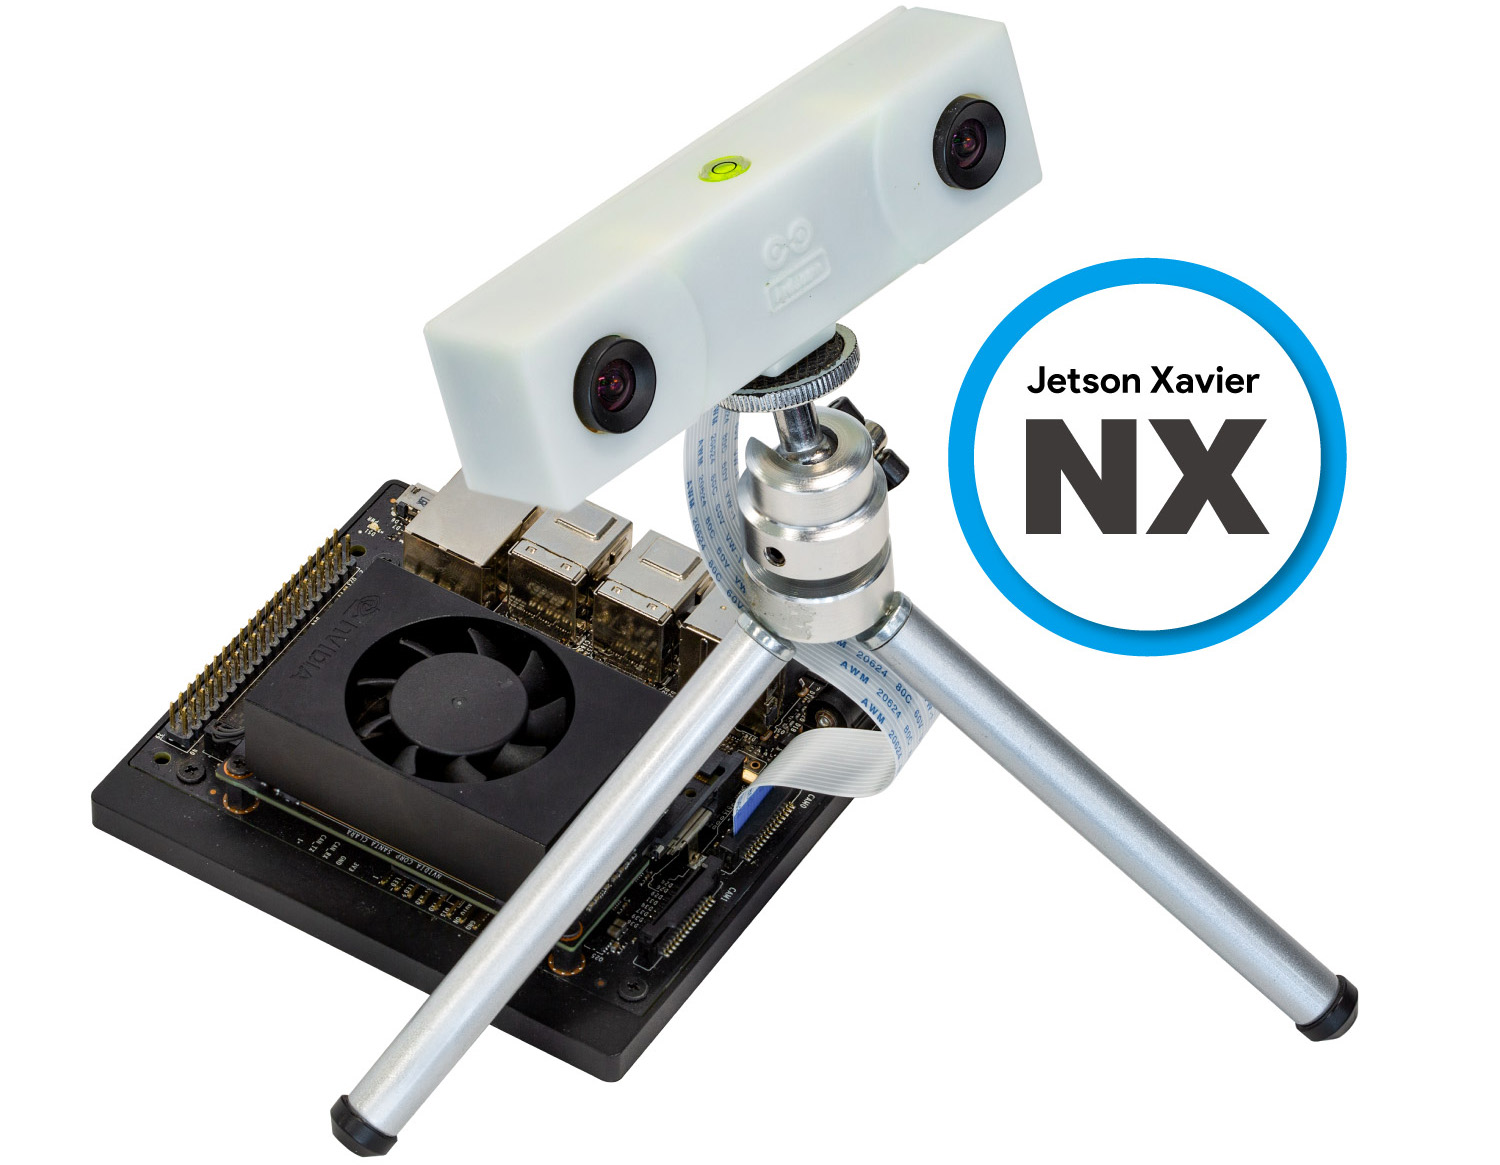 Arducam Stereo Camera 2MP*2 for Raspberry Pi, Nvidia Jetson Nano/Xavier NX - Click to Enlarge